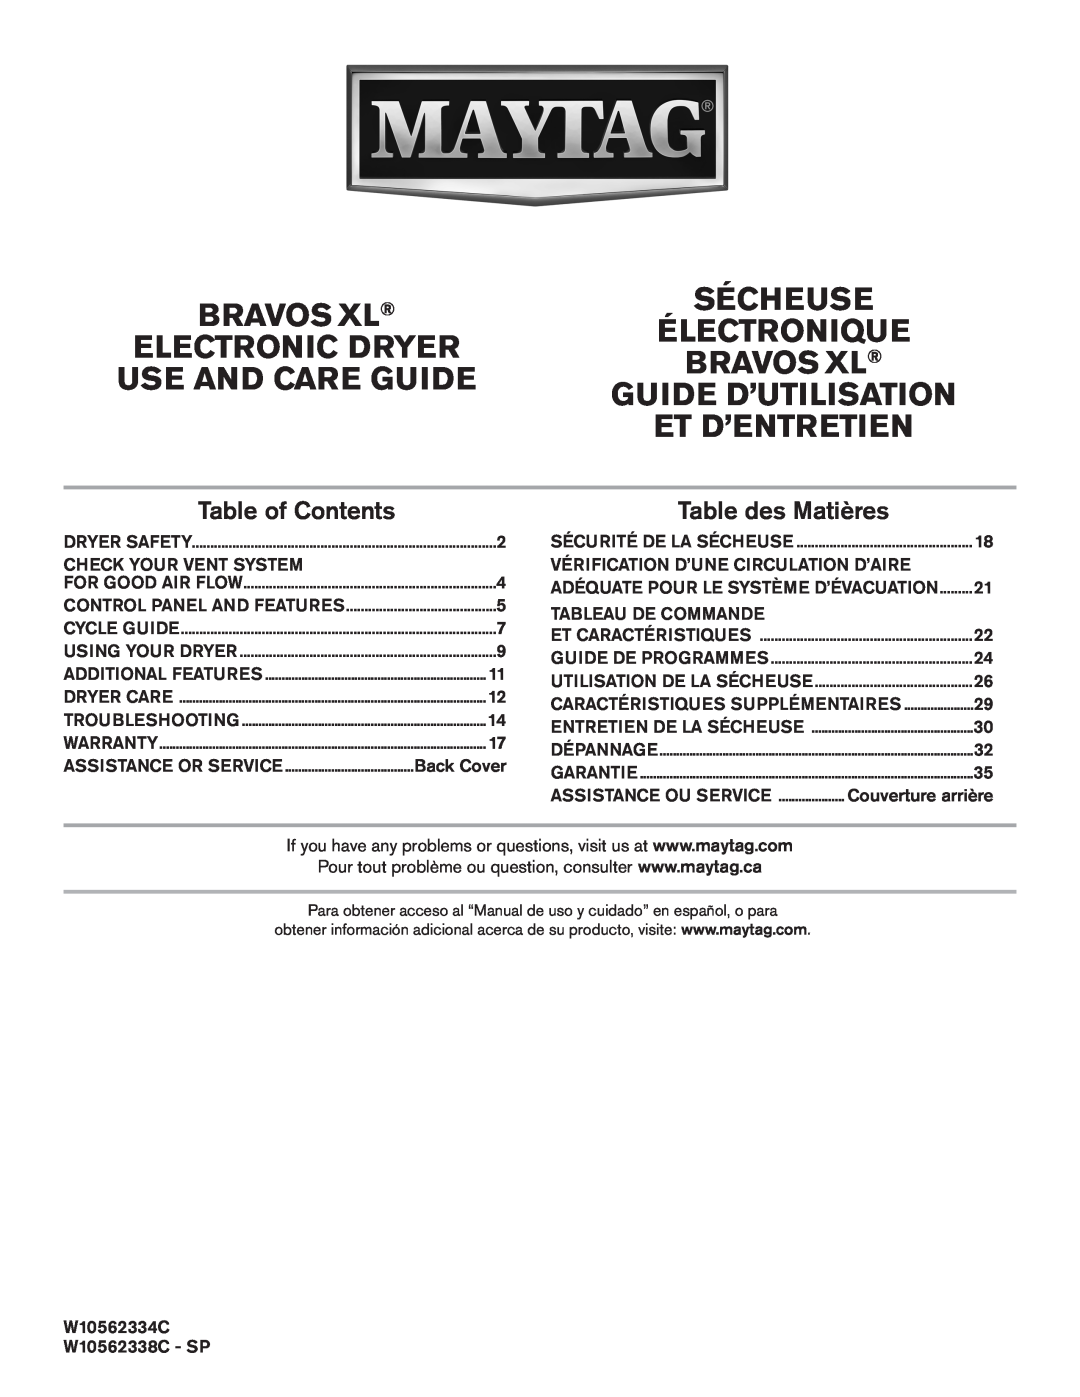 Maytag W105623334C warranty Bravos Xl, Sécheuse, Électronique, Electronic Dryer, Use And Care Guide, Guide D’Utilisation 